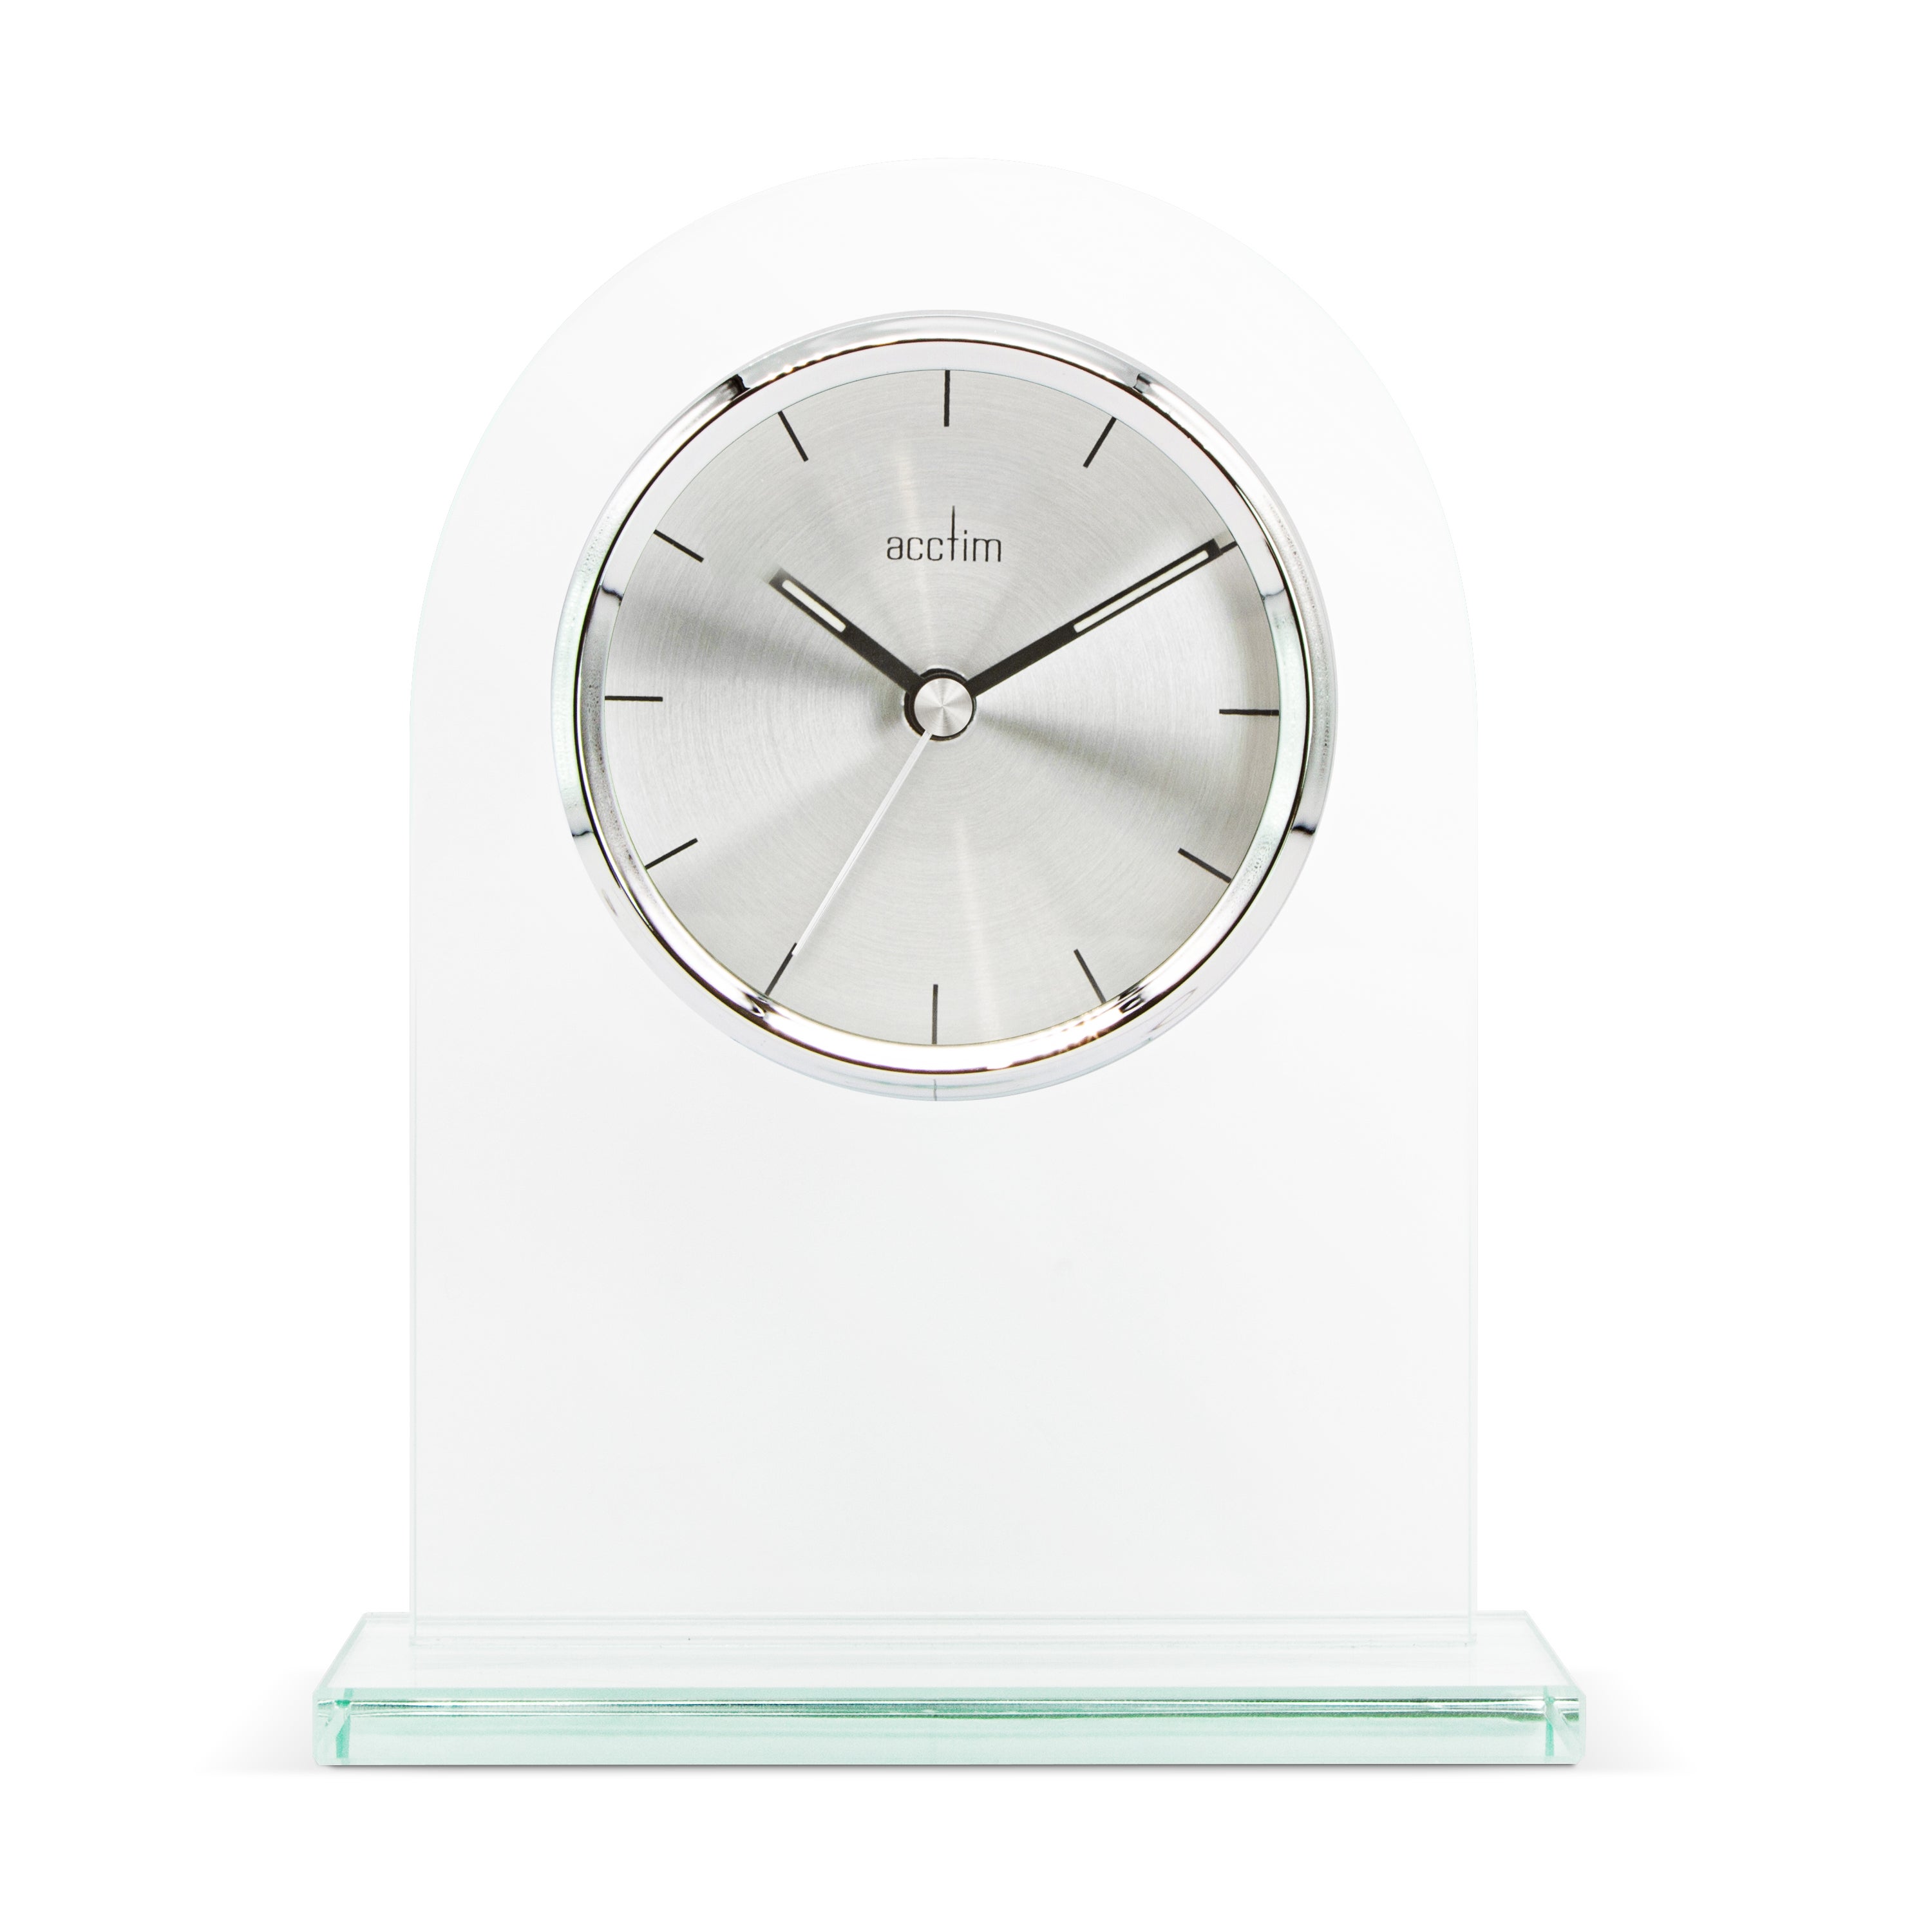 Acctim Ledburn Pendulum Glass Mantel Clock